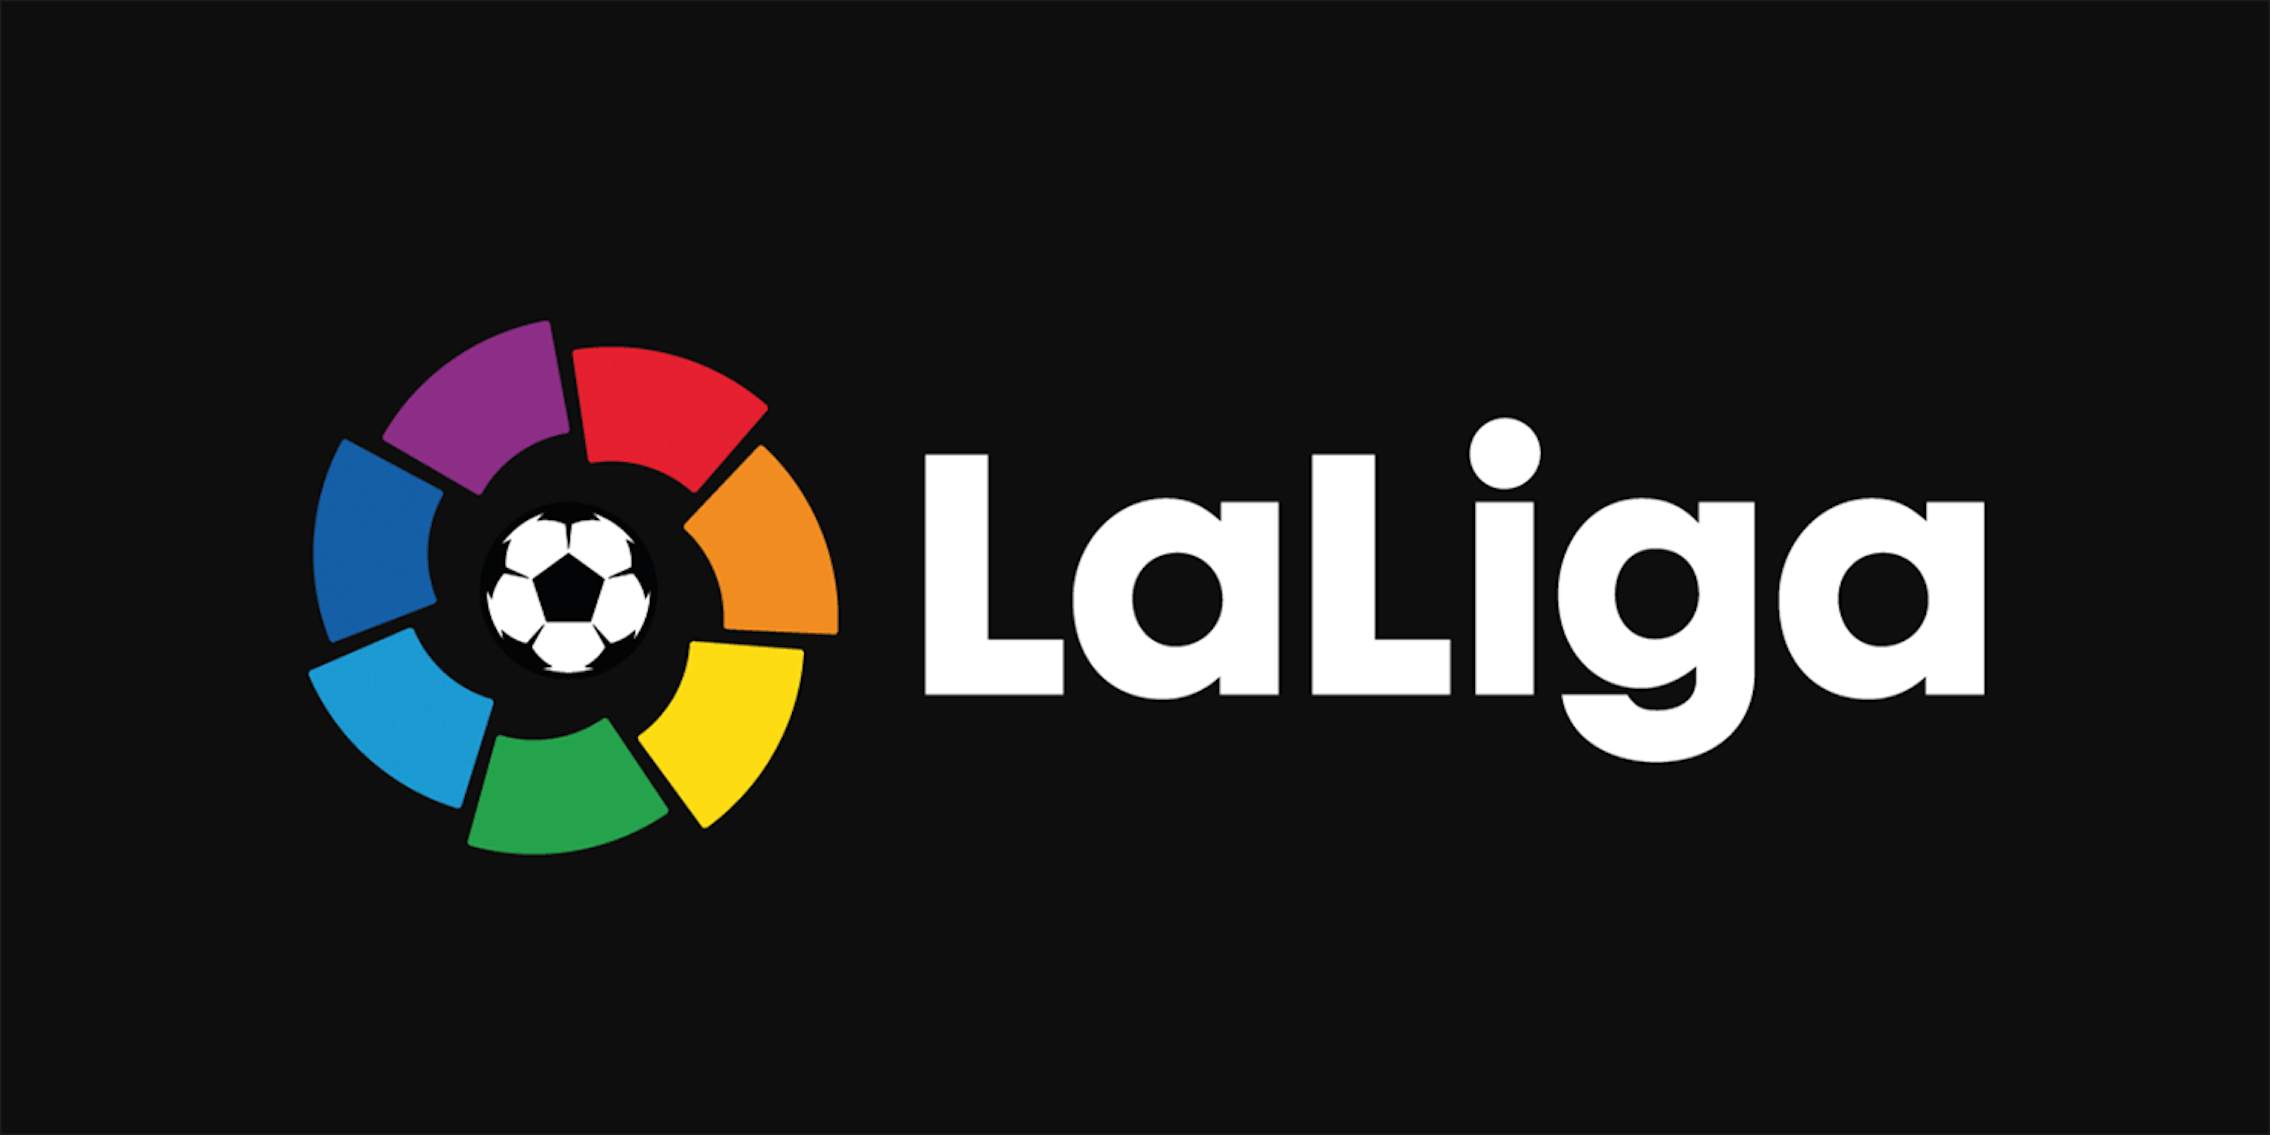 How to Stream La Liga: Barcelona, Real Madrid, and More